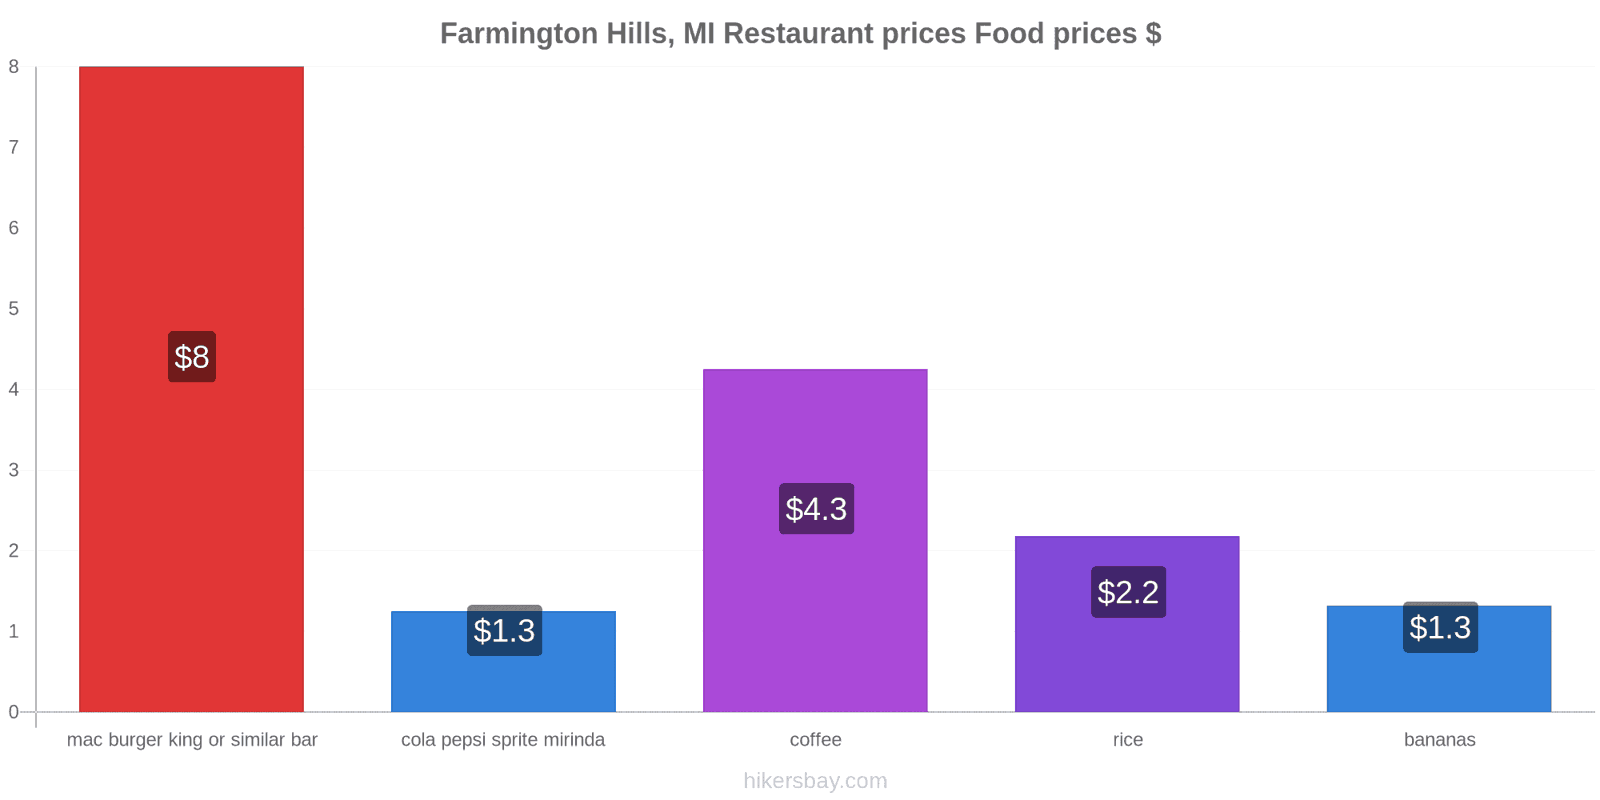 Farmington Hills, MI price changes hikersbay.com